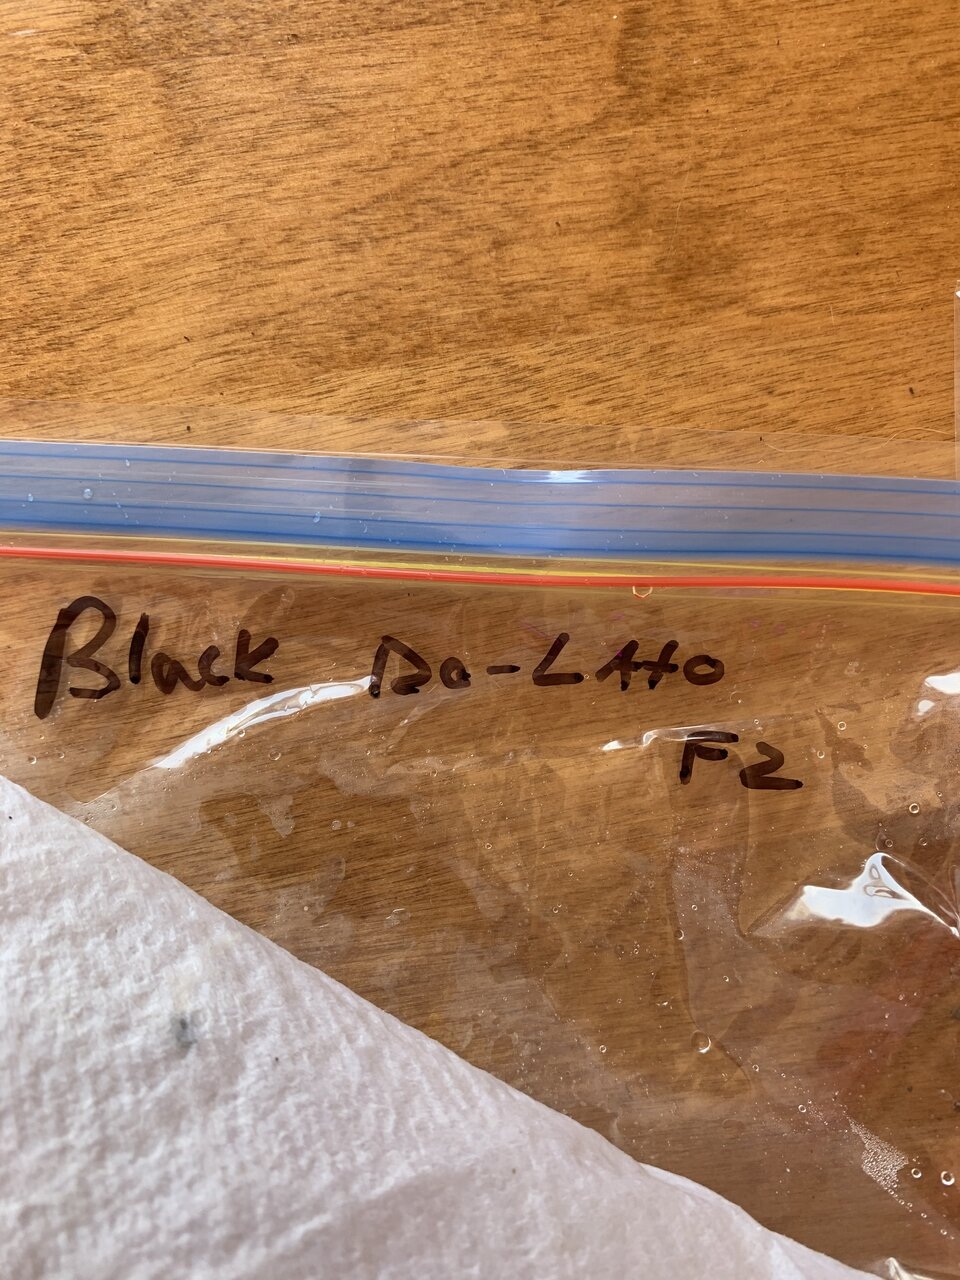 Black Do-Lato ; in house genetics